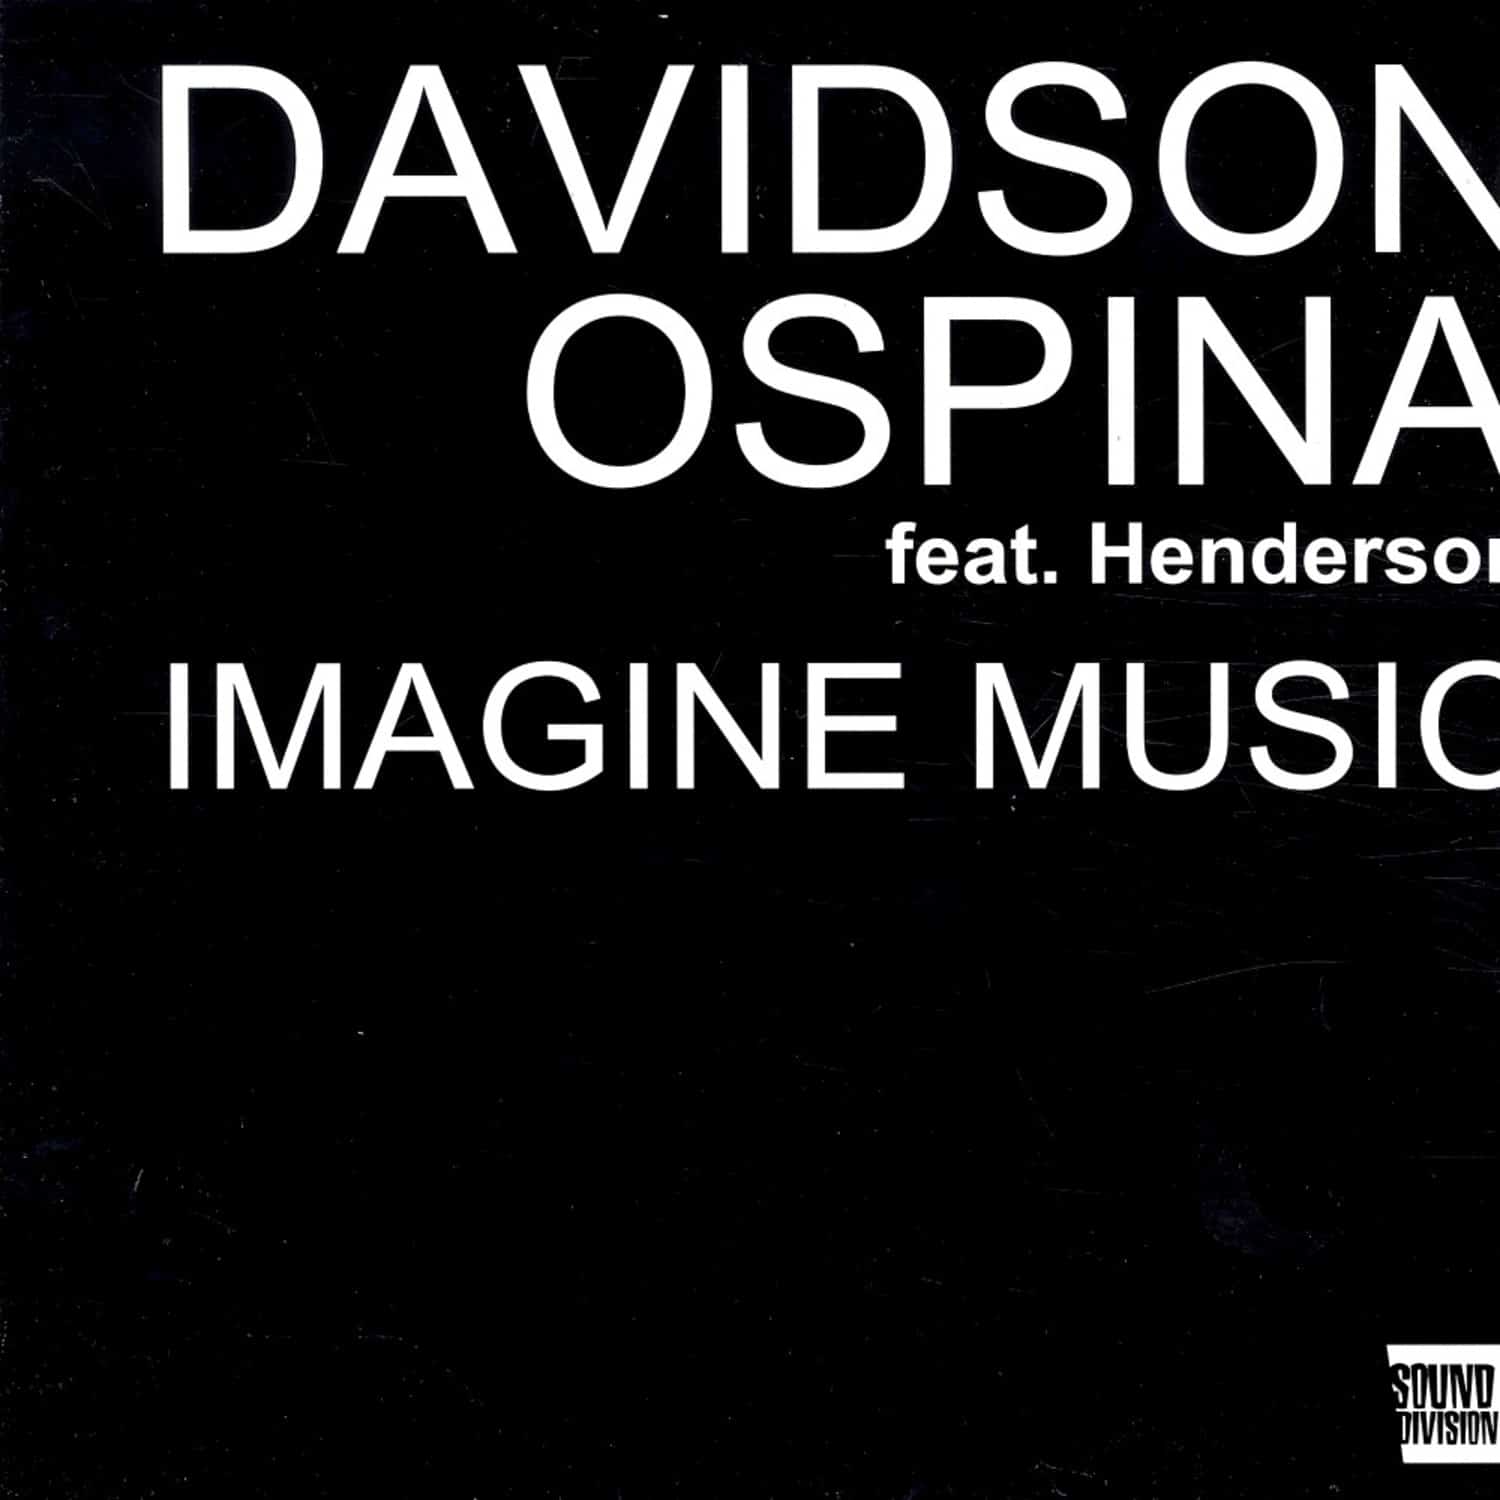 Davidson Ospina - IMAGINE MUSIC